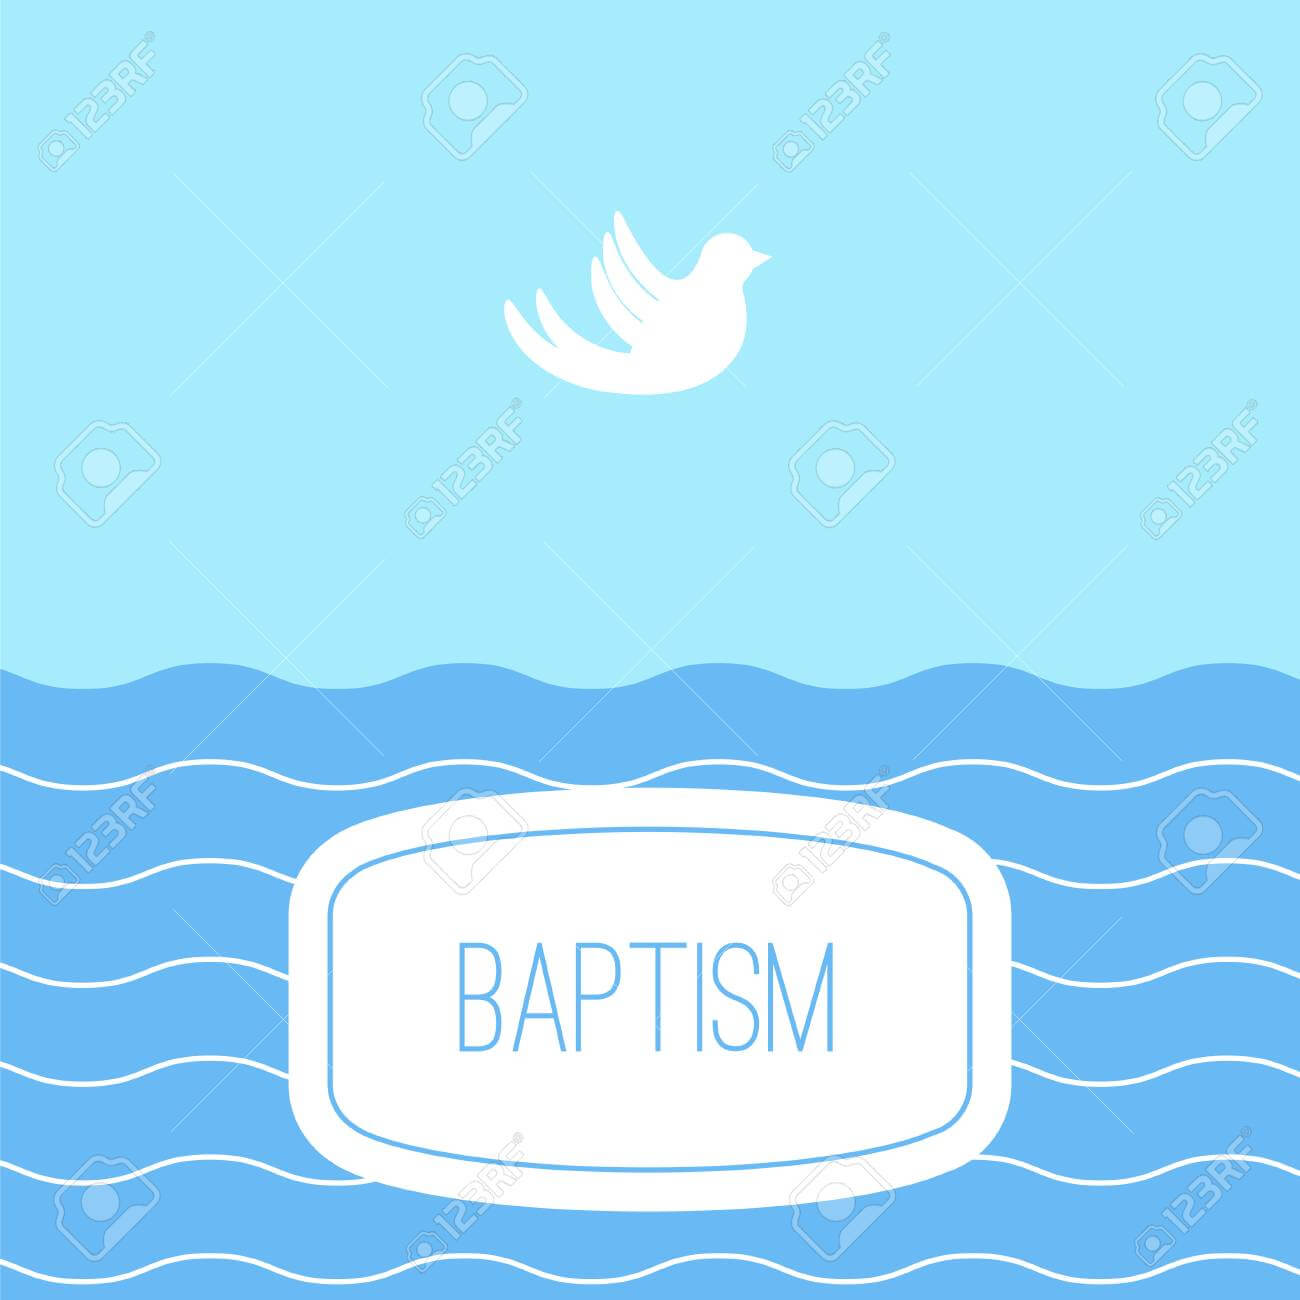 Baptism Invitation Card Template. Stock Vector Illustration For.. In Baptism Invitation Card Template